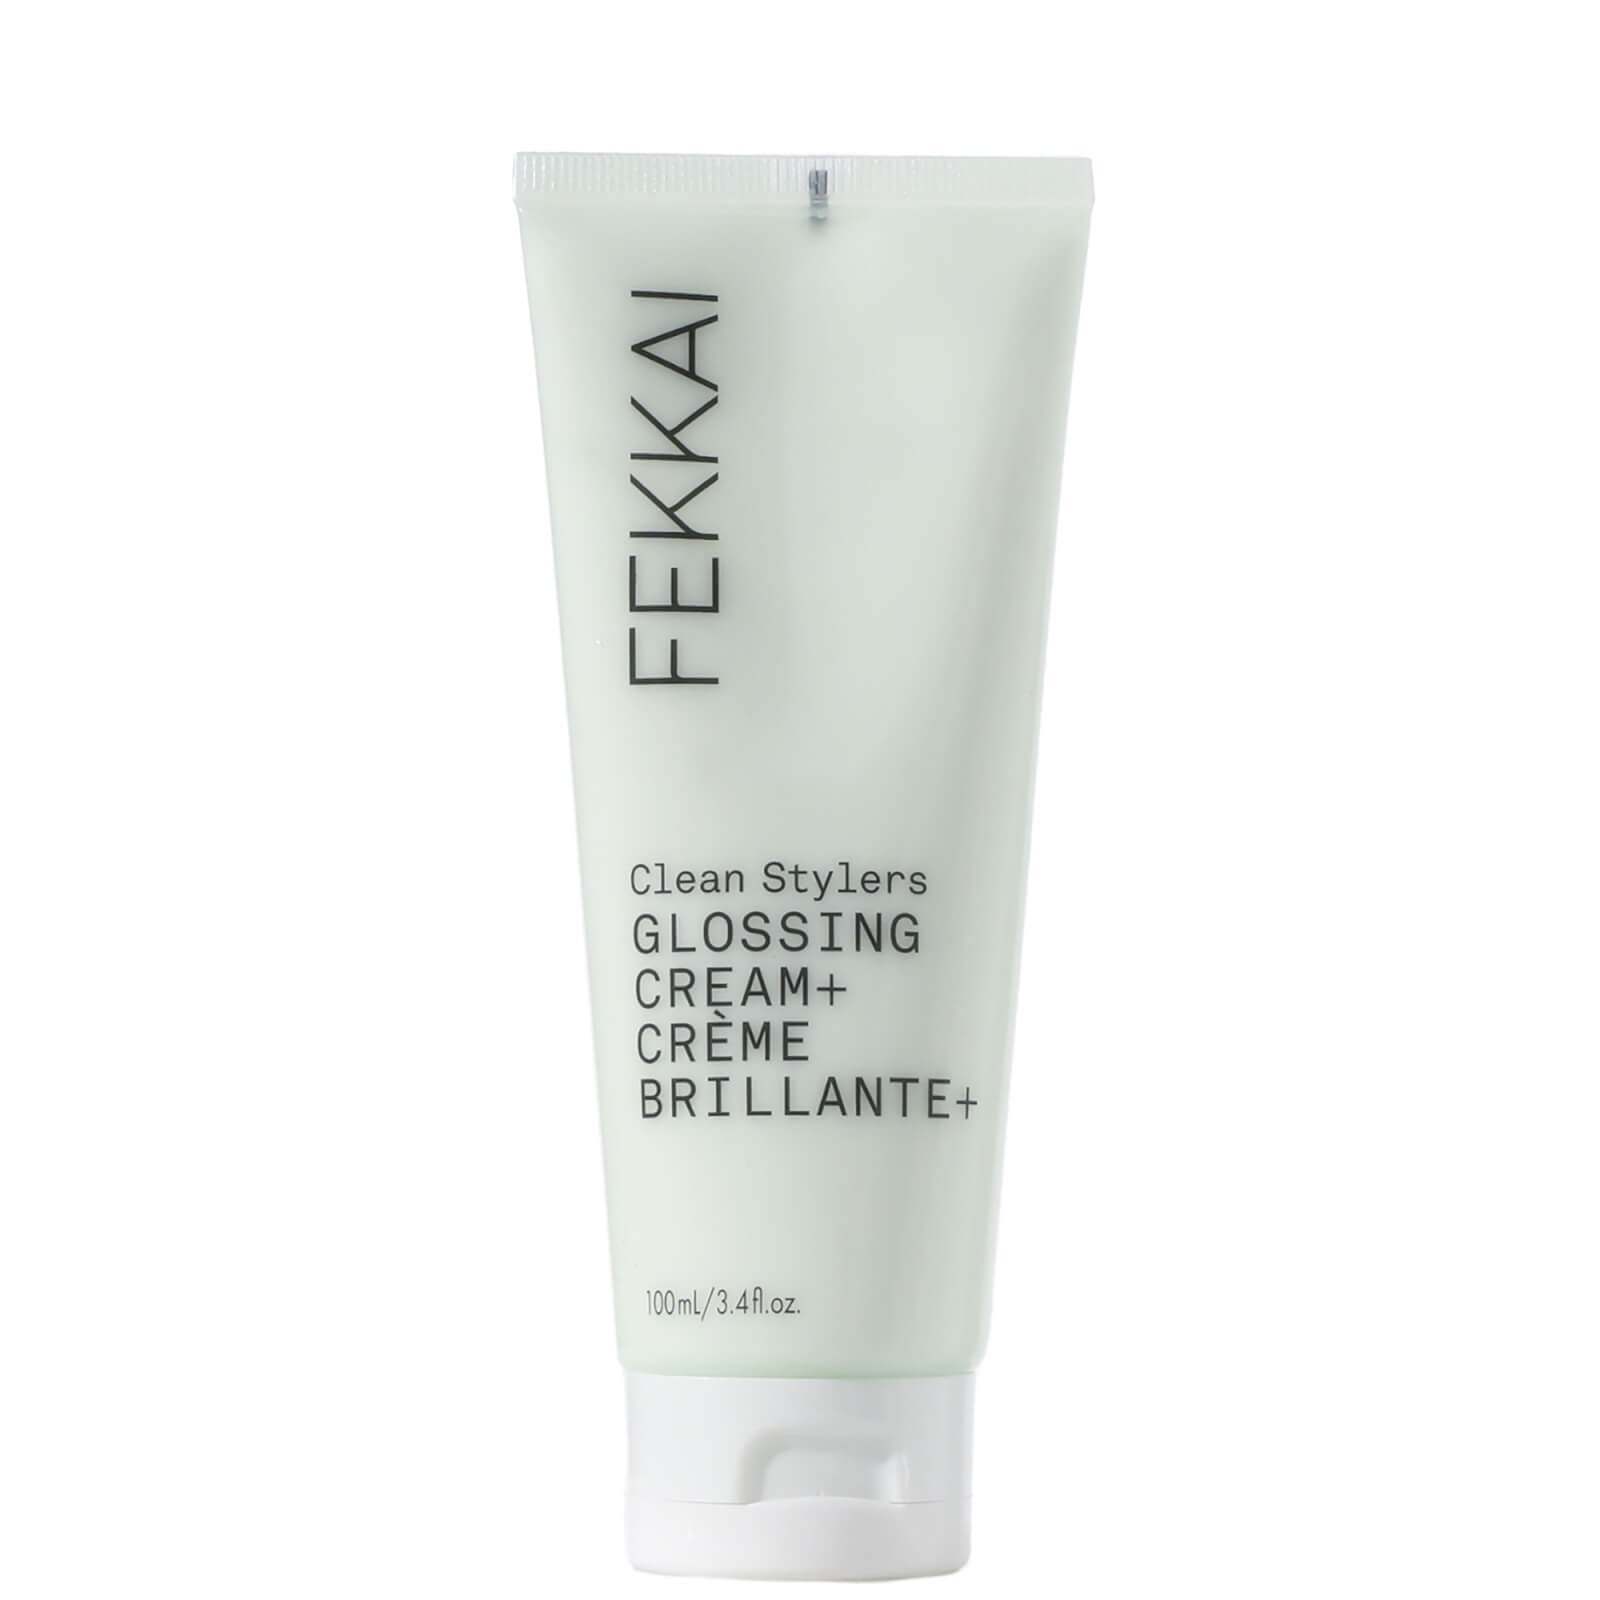 Fekkai Clean Stylers Glossing Cream+ 100ml product